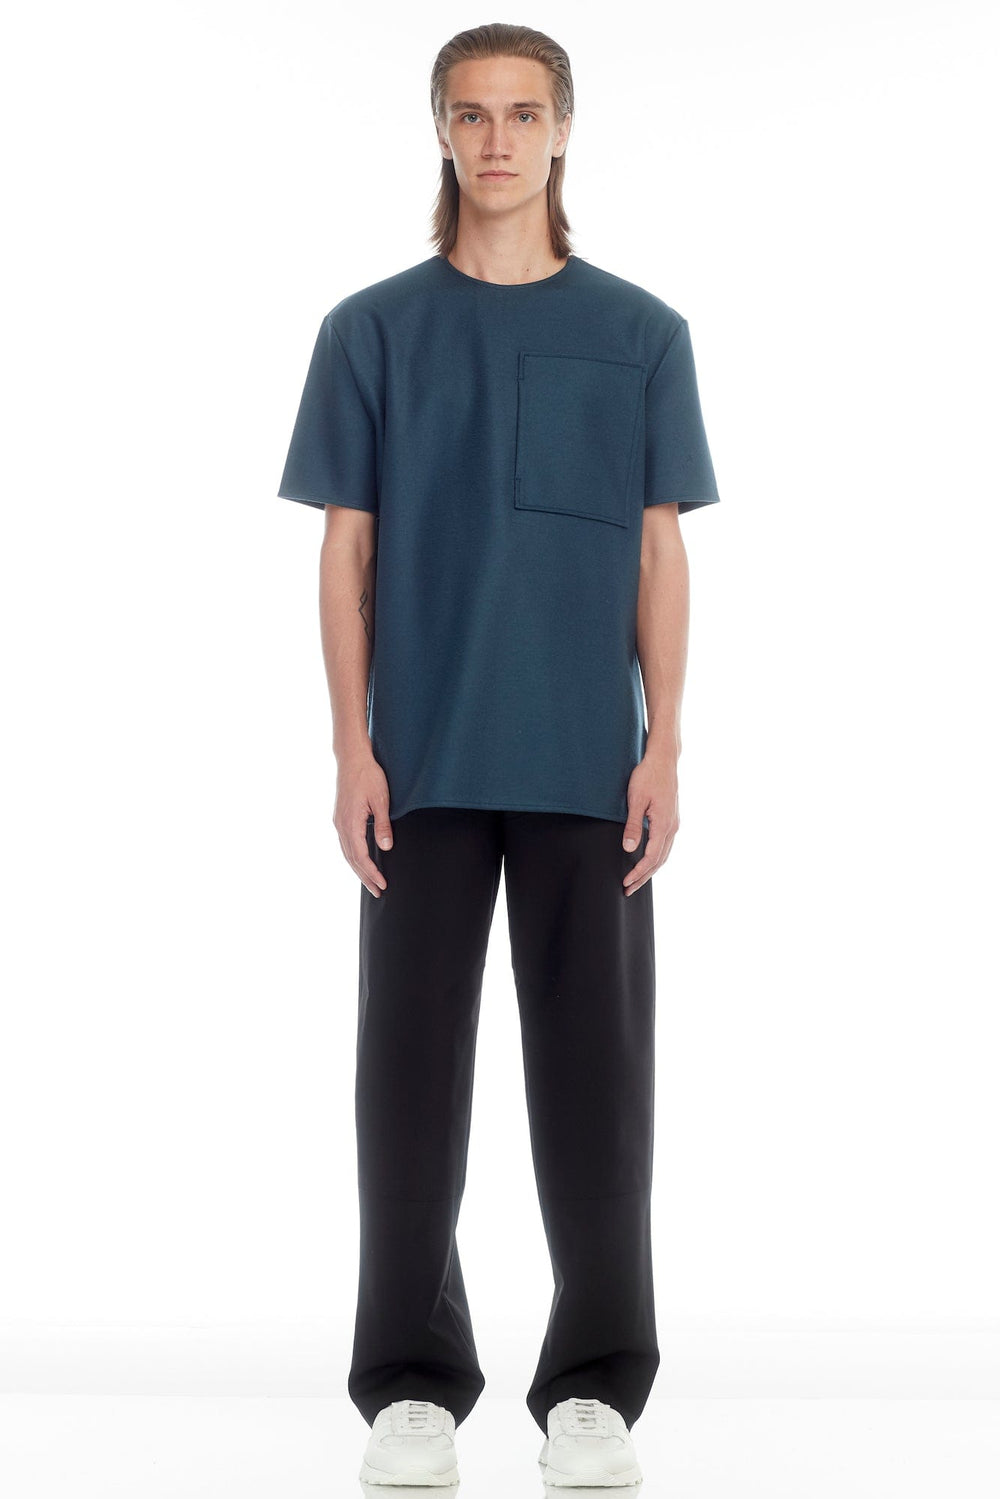 Jil Sander T-Shirt CN SS in Aqua – Antidote Fashion and Lifestyle